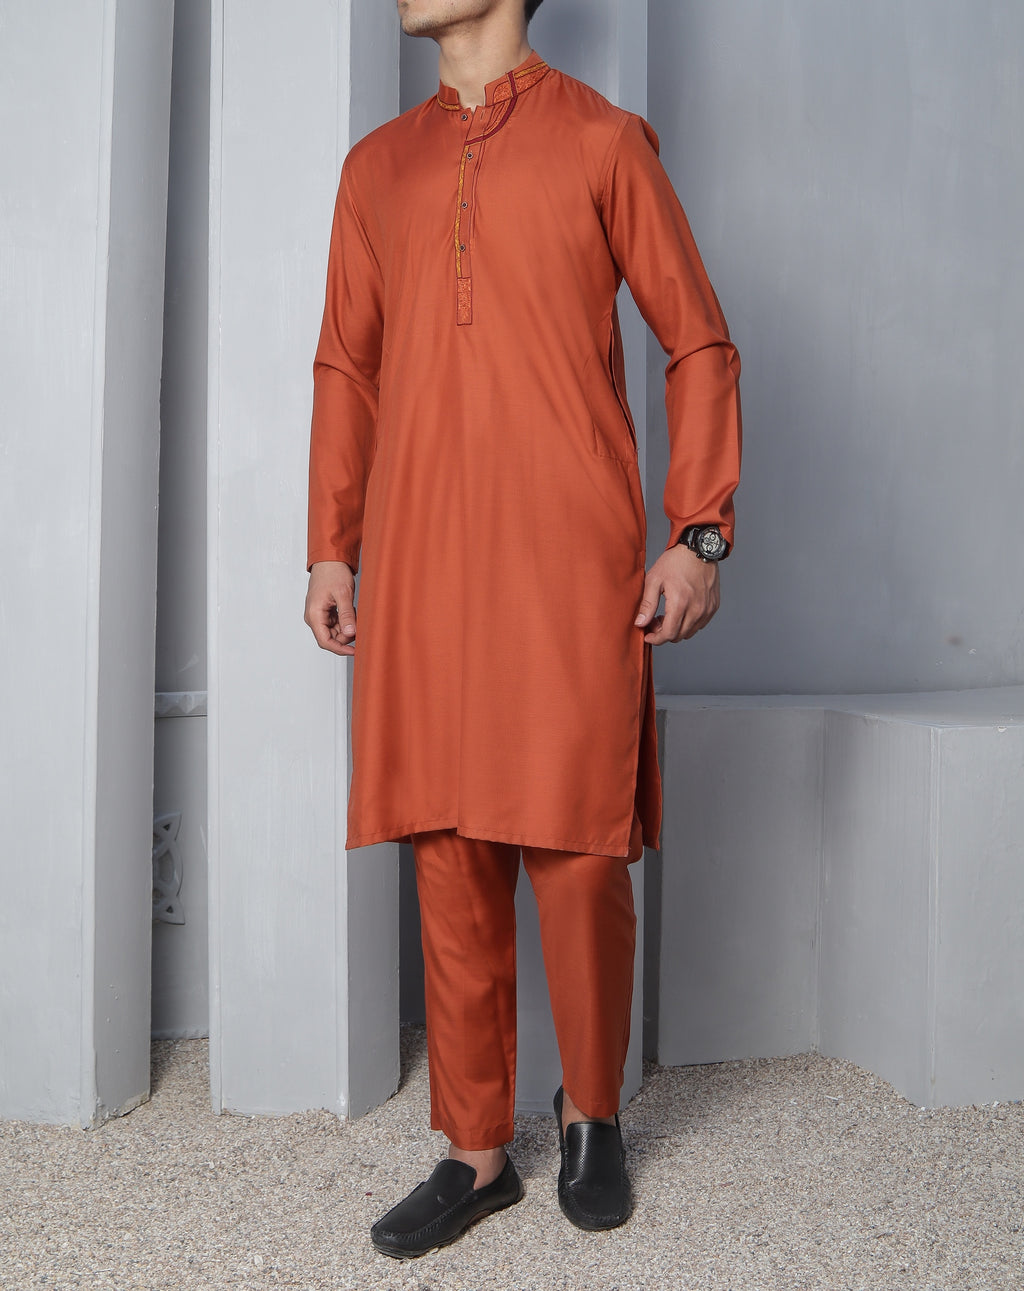 Orange Qameez Shalwar for Teens BQ-42501